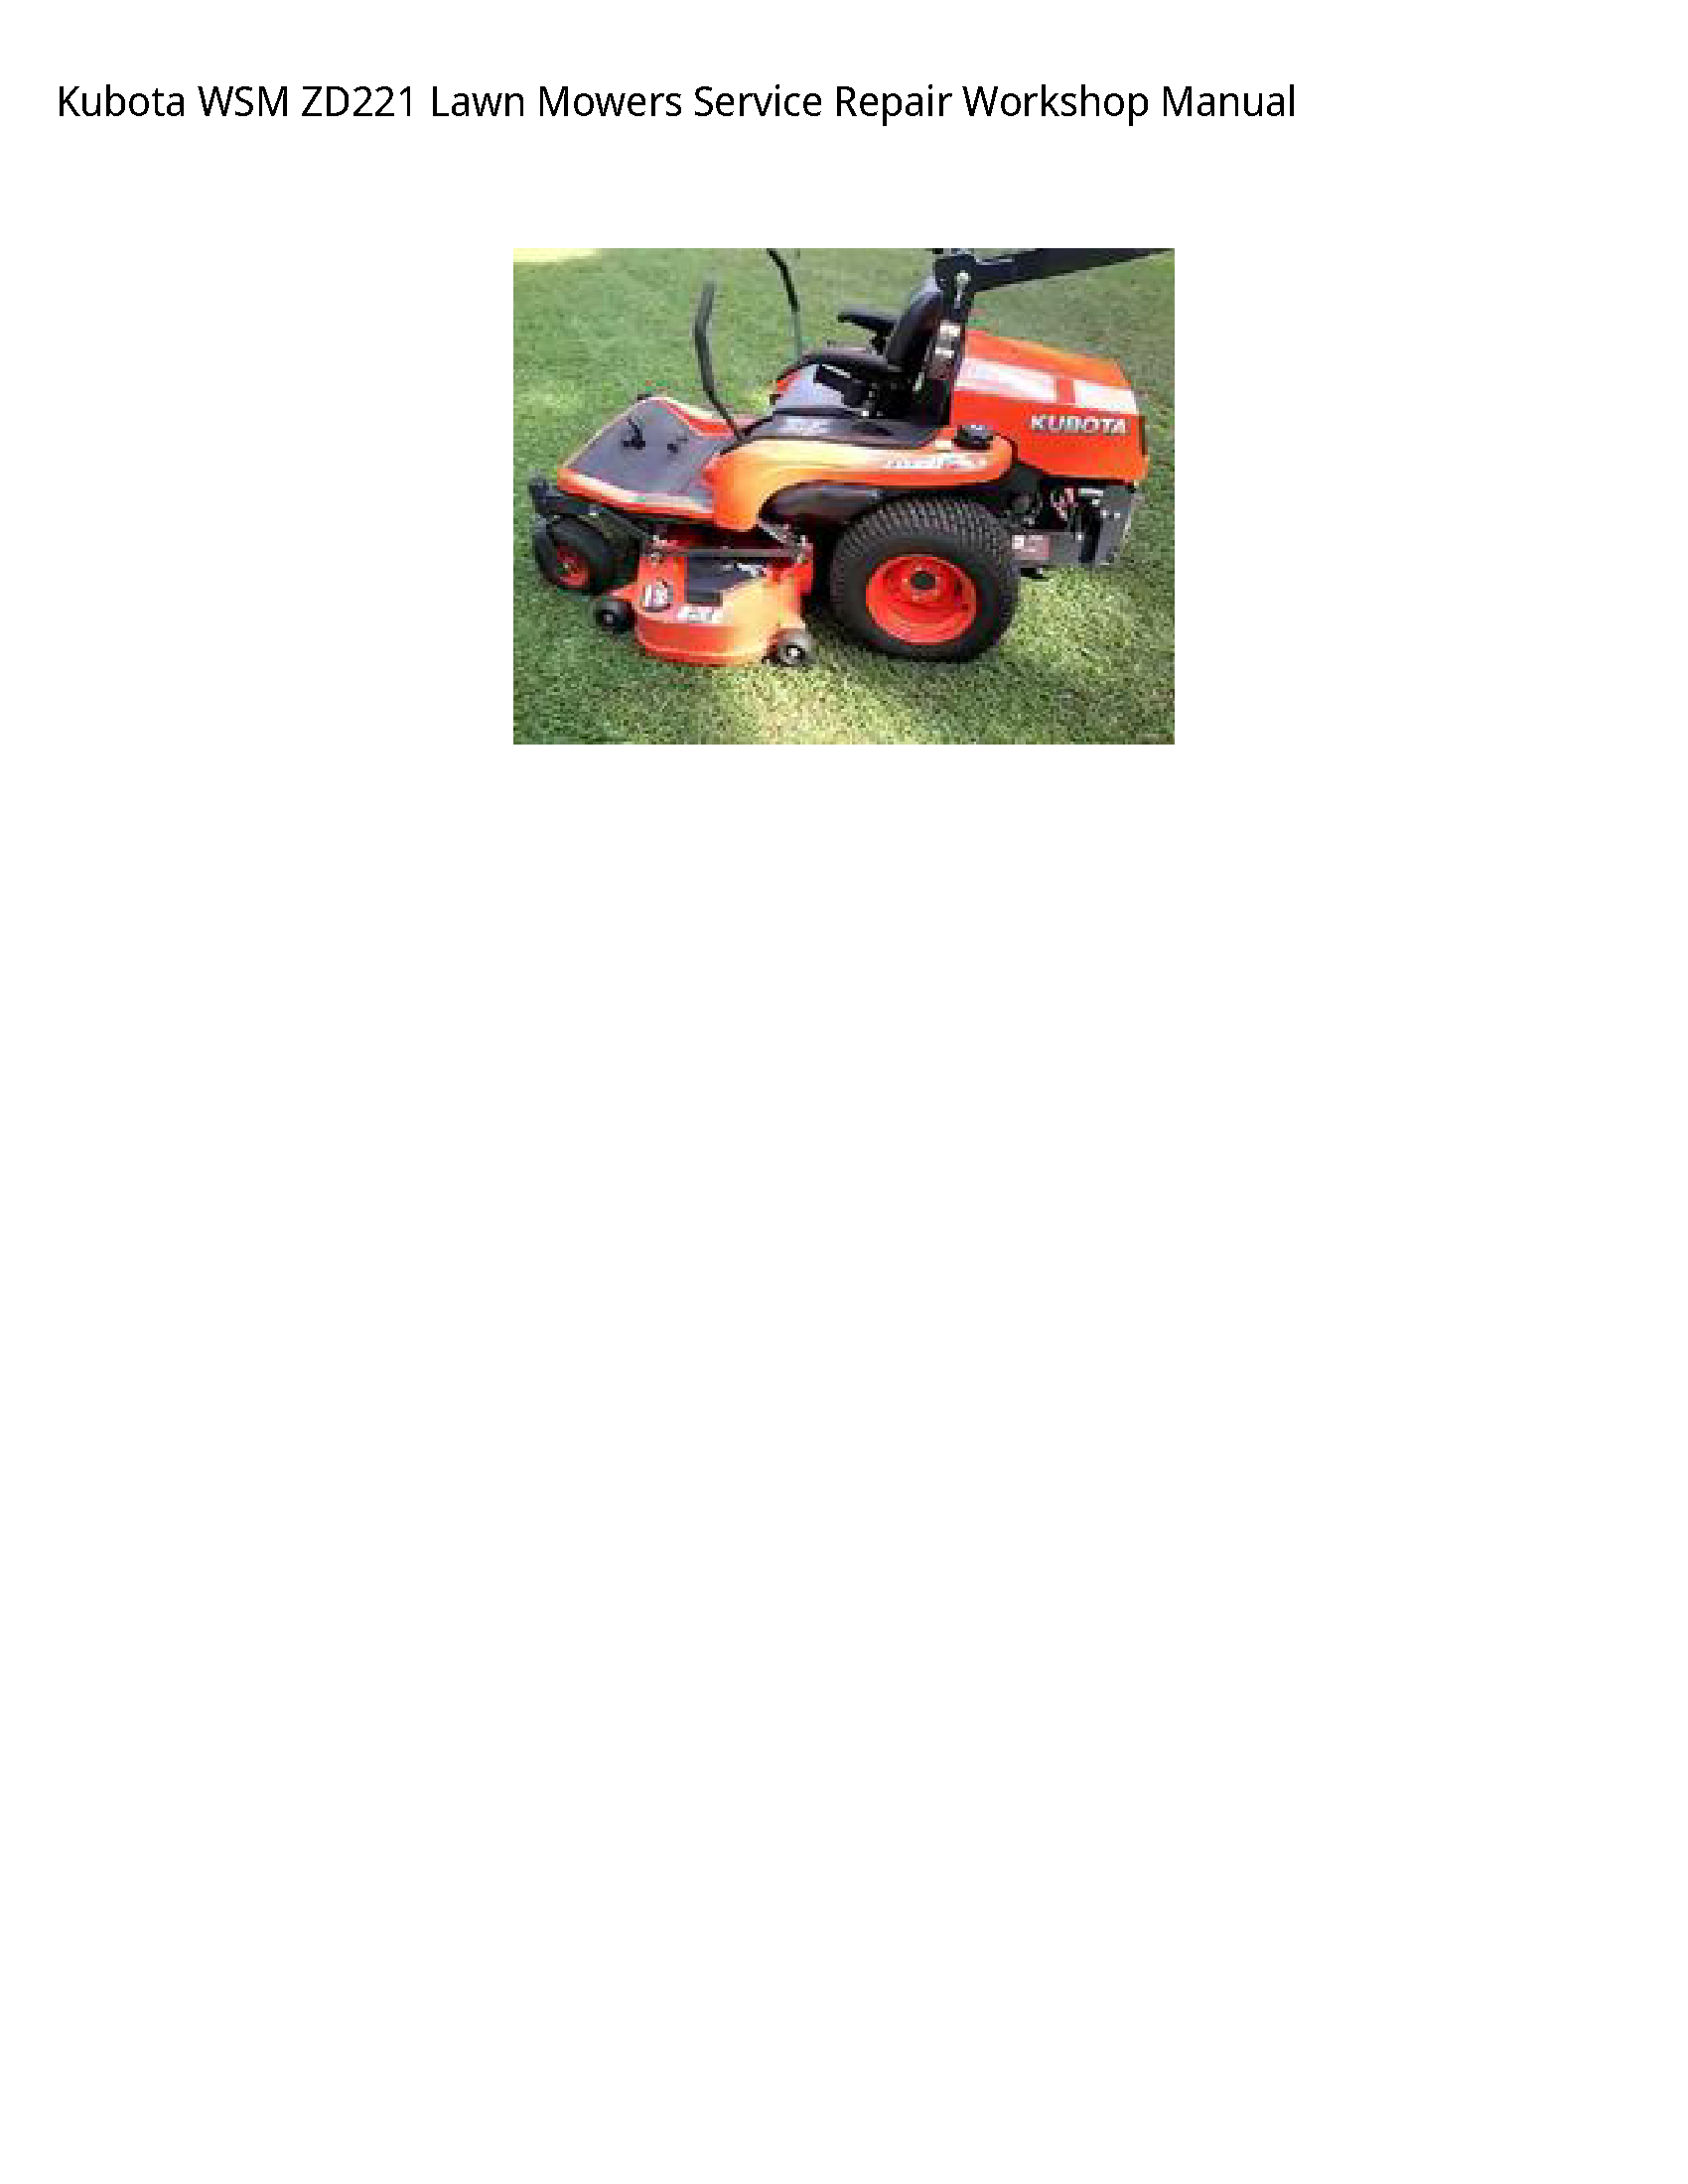 Kubota ZD221 WSM Lawn Mowers manual